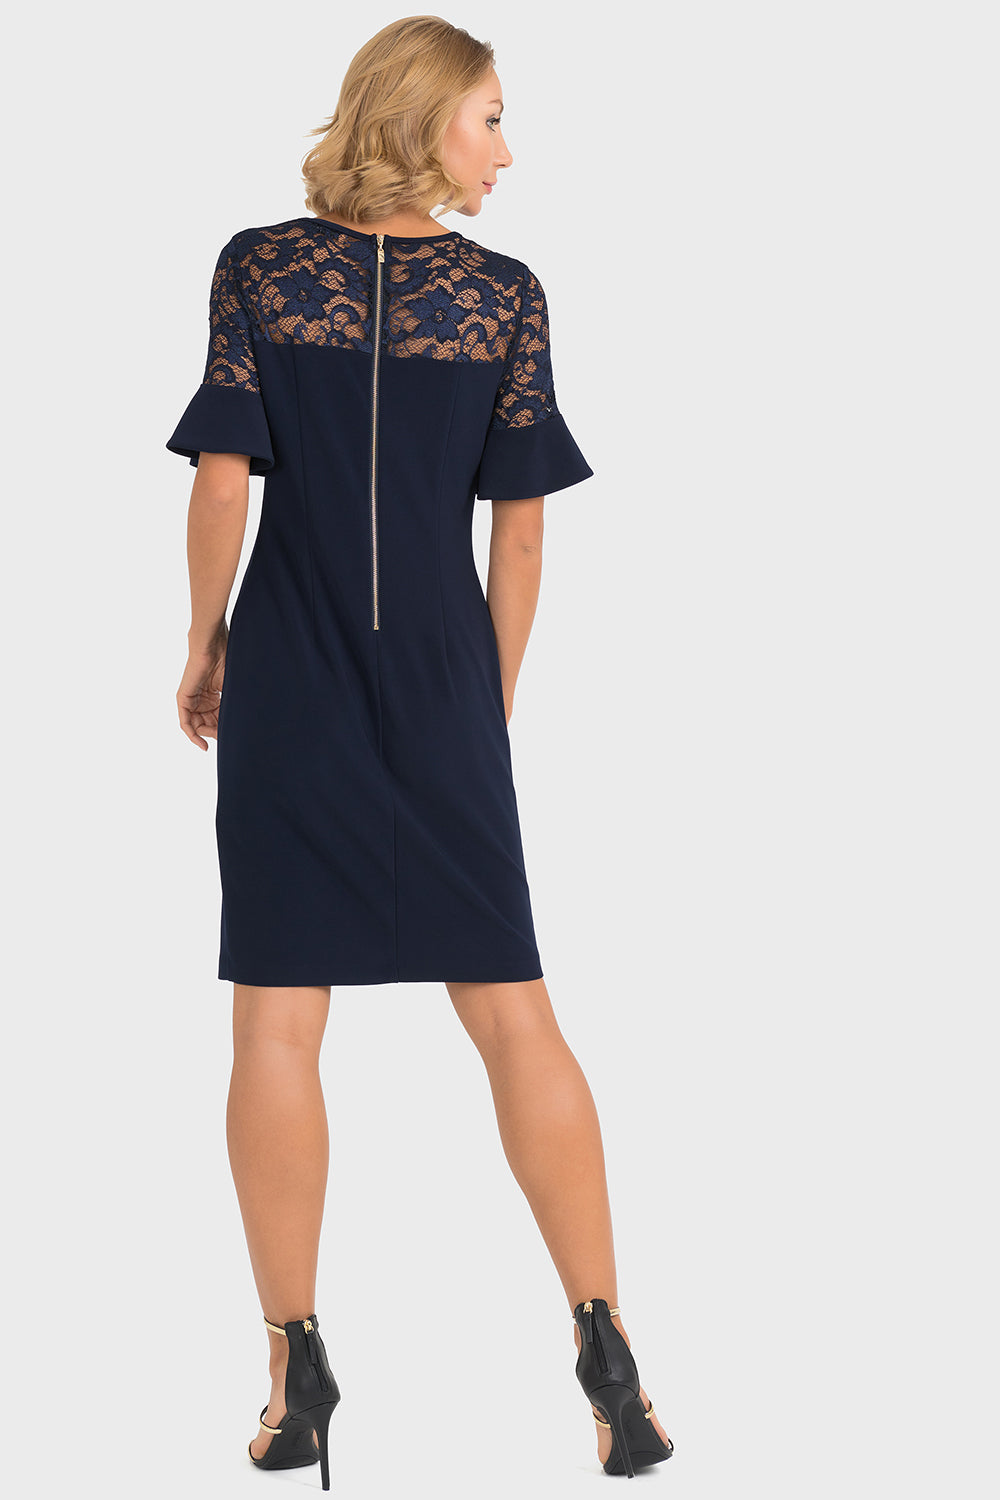 Joseph Ribkoff Midnight Blue Dress Style 193509